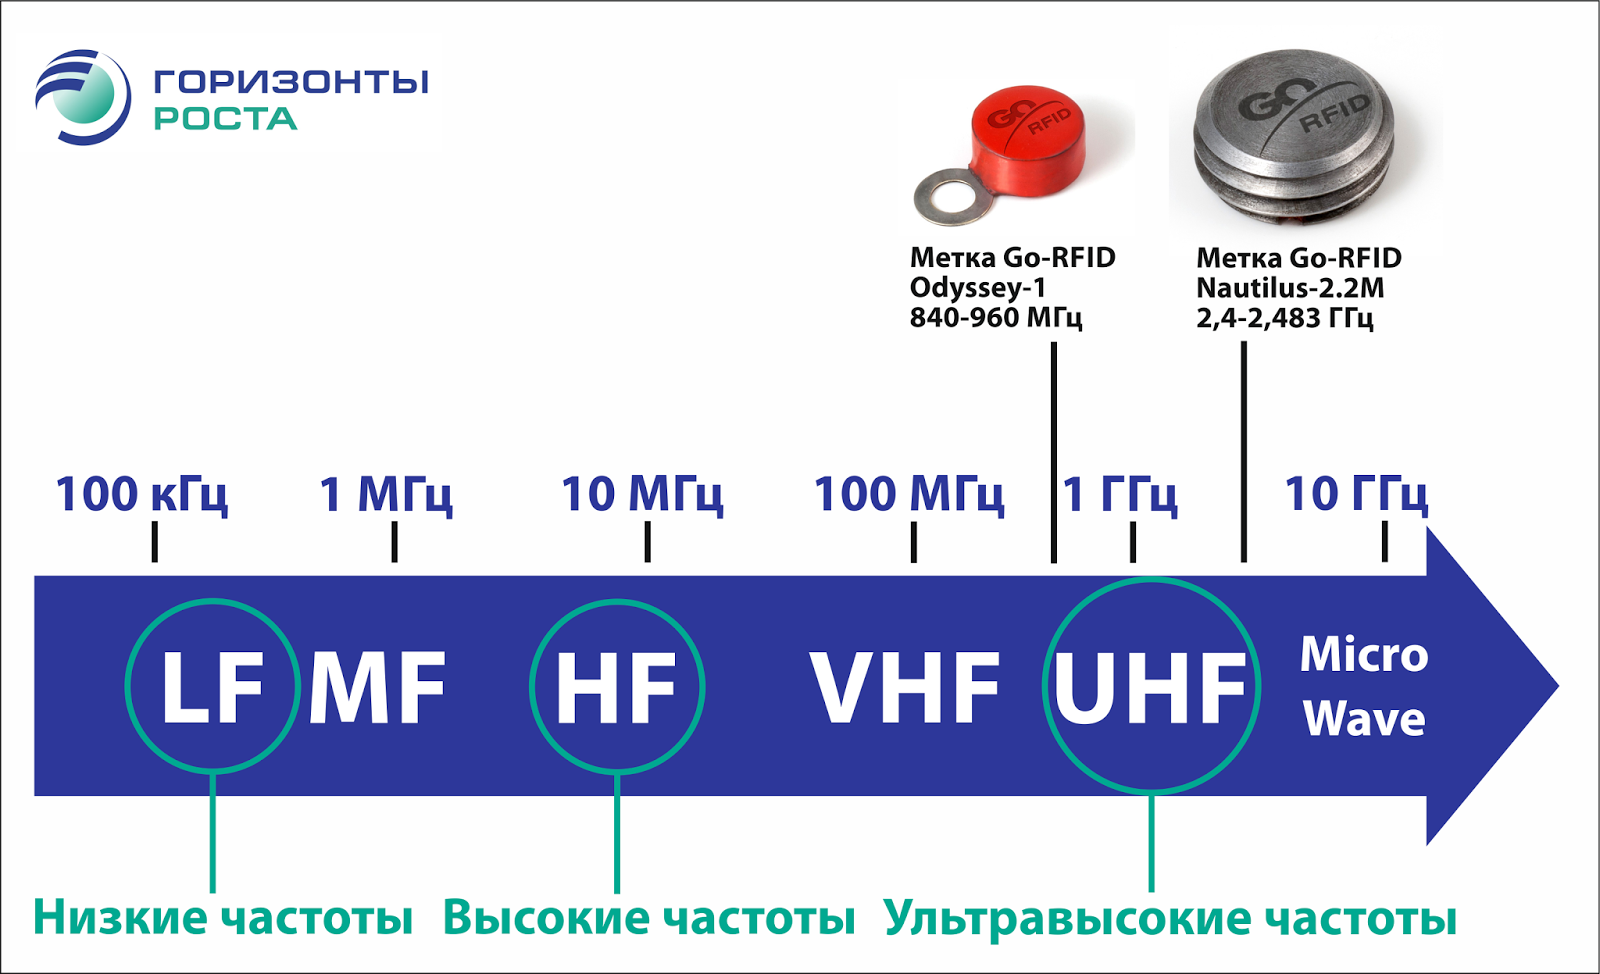 1024 кгц. Диапазон частот UHF И VHF. VHF UHF диапазоны. Частоты RFID меток. RFID-метки — микрочипы.